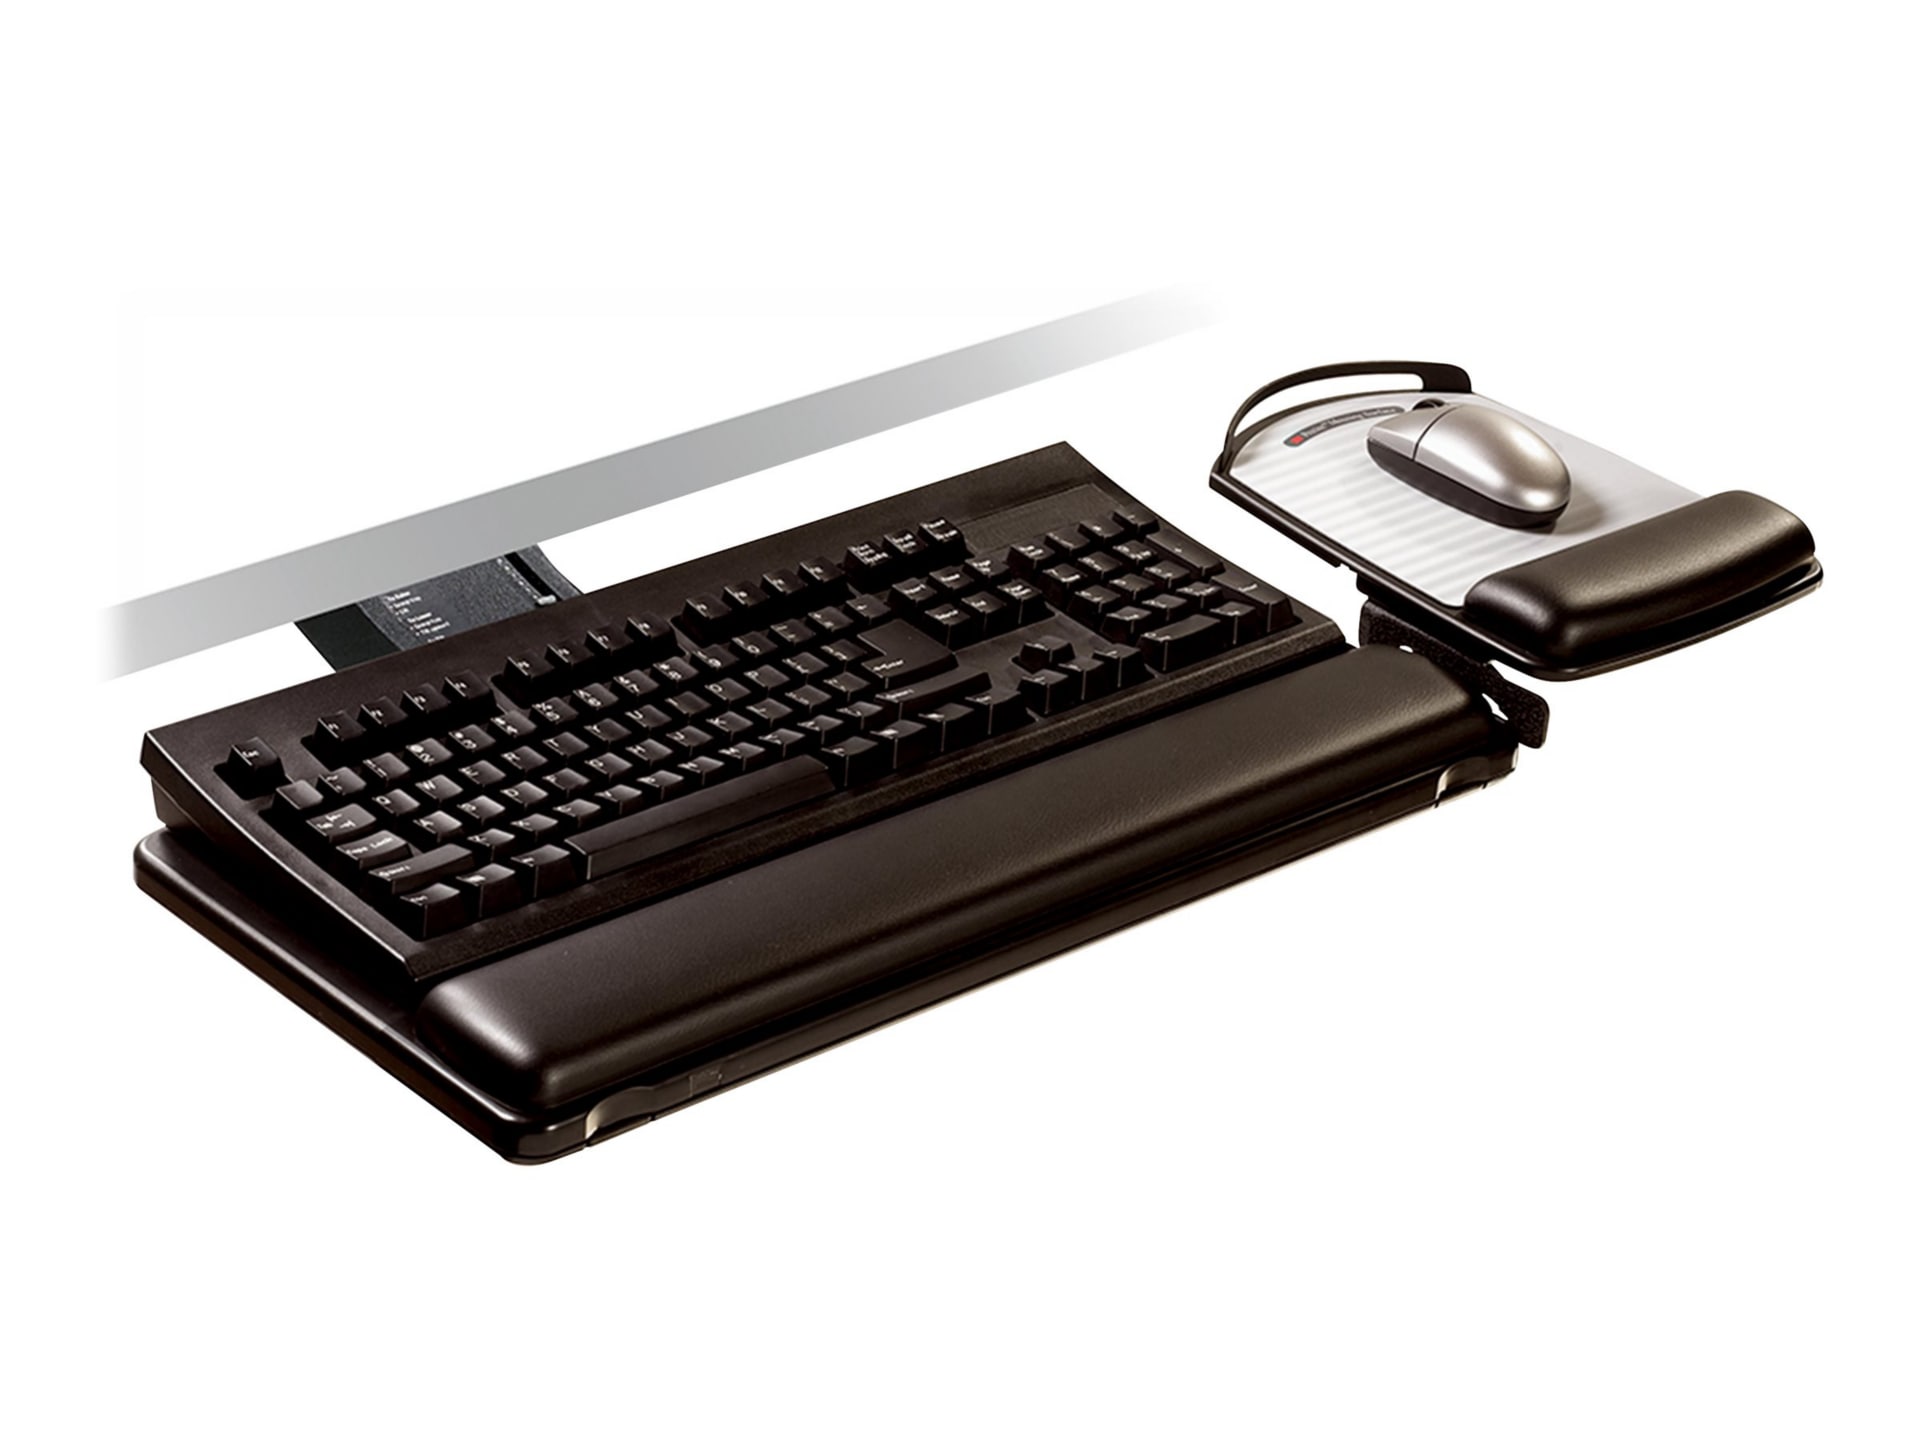 xerox equipment office leasing 3M Tray Adjustable  AKT180LE Office Keyboard  AKT180LE